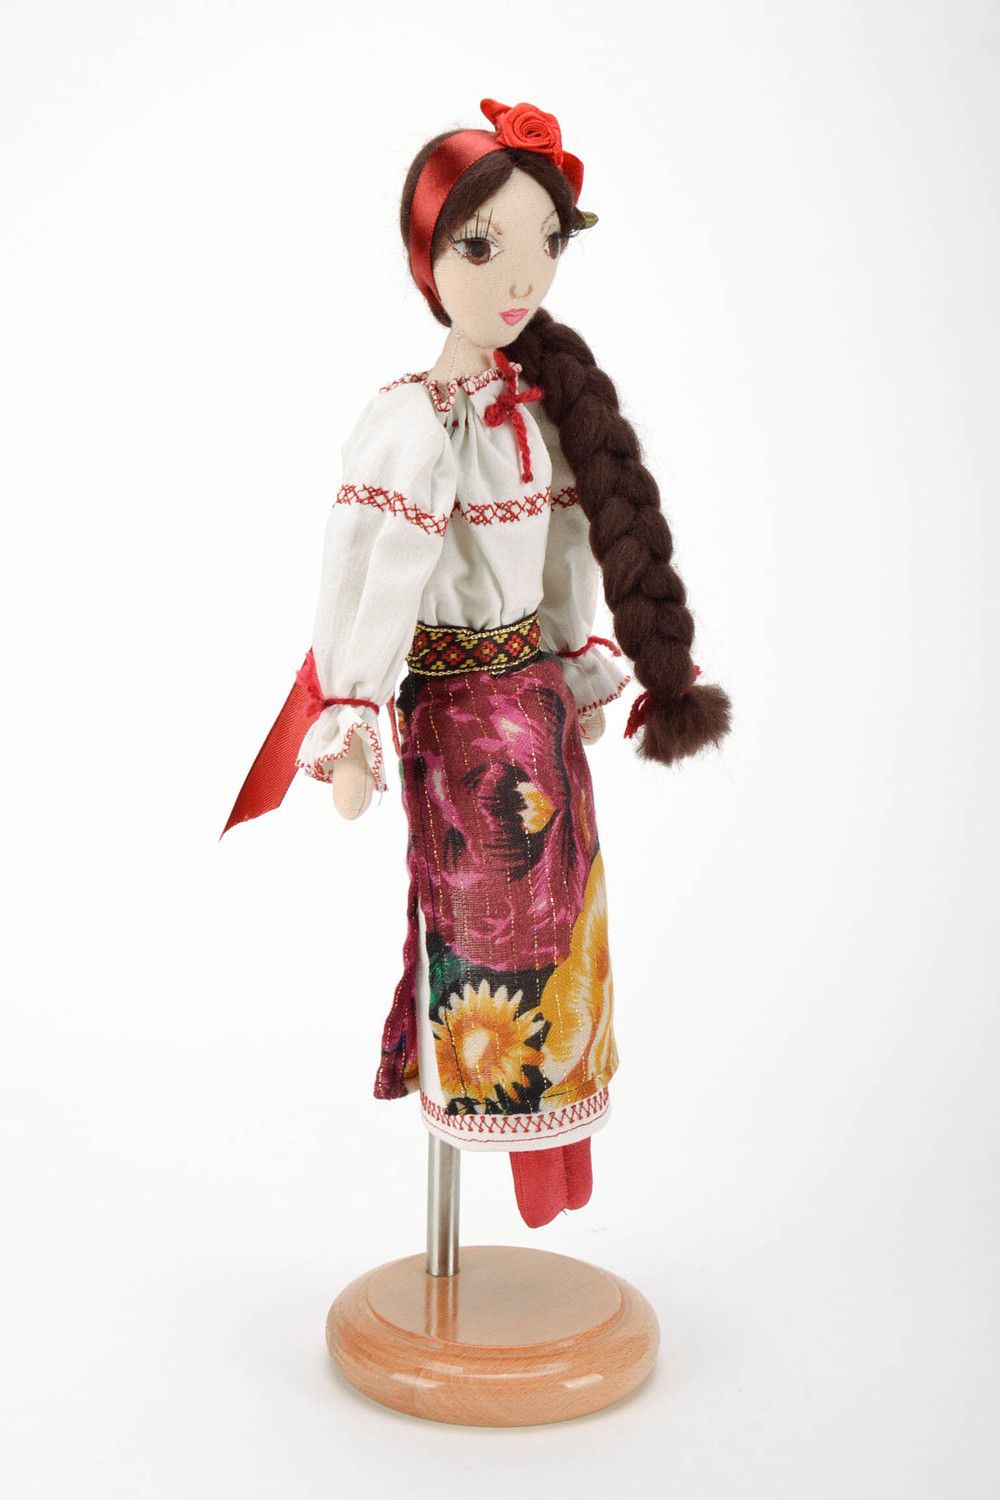 Кукла мягкая на подставке Украиночка в венке из роз фото 2